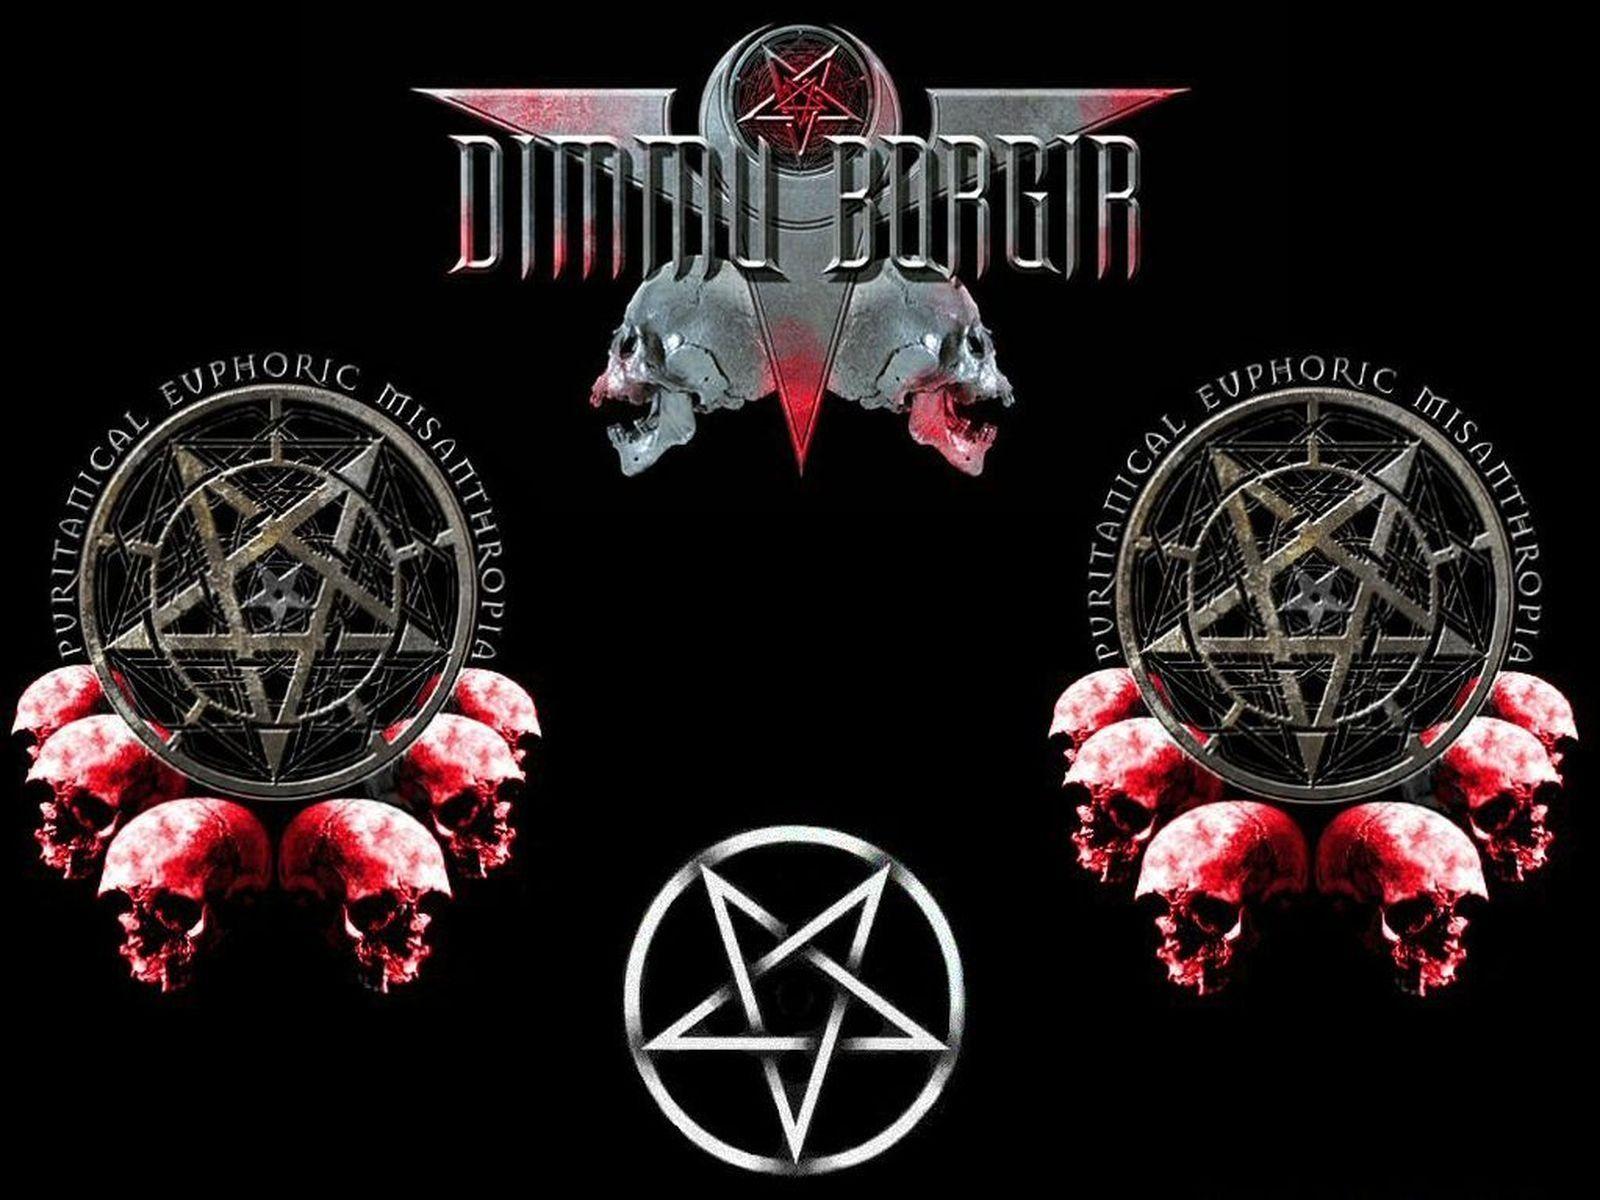 Dimmu Borgir, DIMMUBORGIR Wallpaper Metal Bands: Heavy Metal